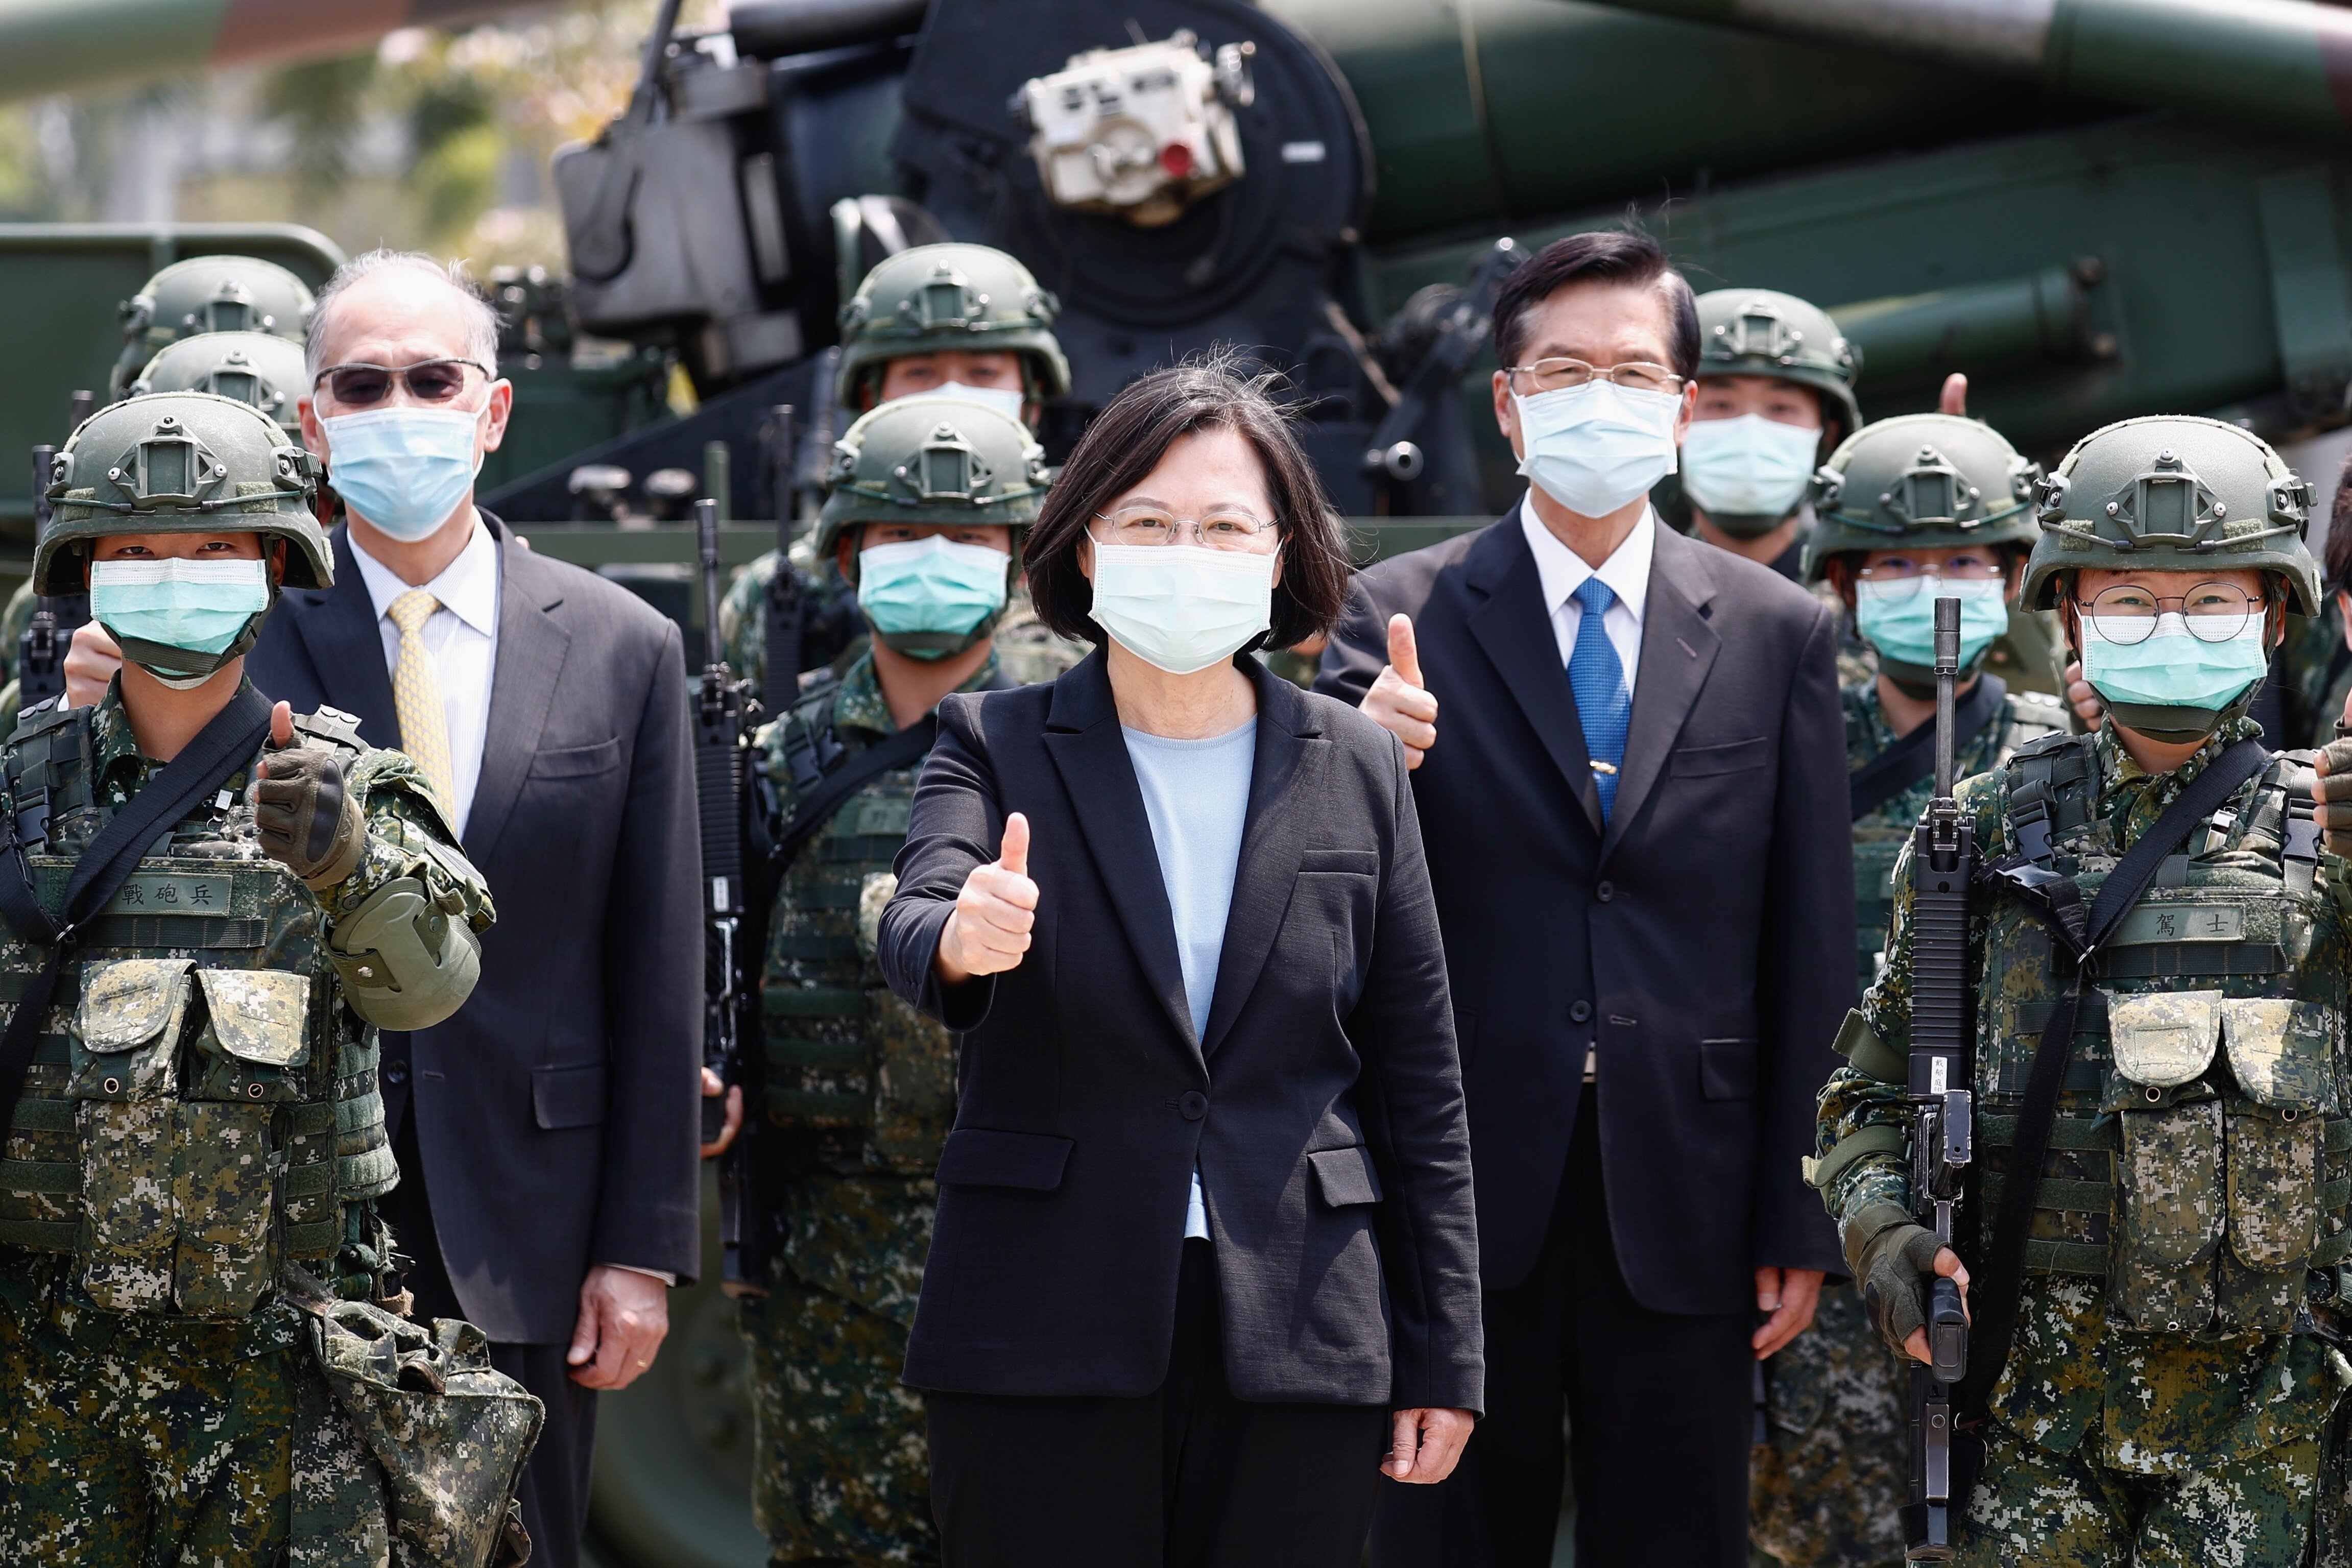 Taiwanese President Tsai Ing-wen gives a thumbs up during a visit to a military base amid the coronavirus pandemic, in Tainan, Taiwan, on April 9. Photo: EPA-EFE